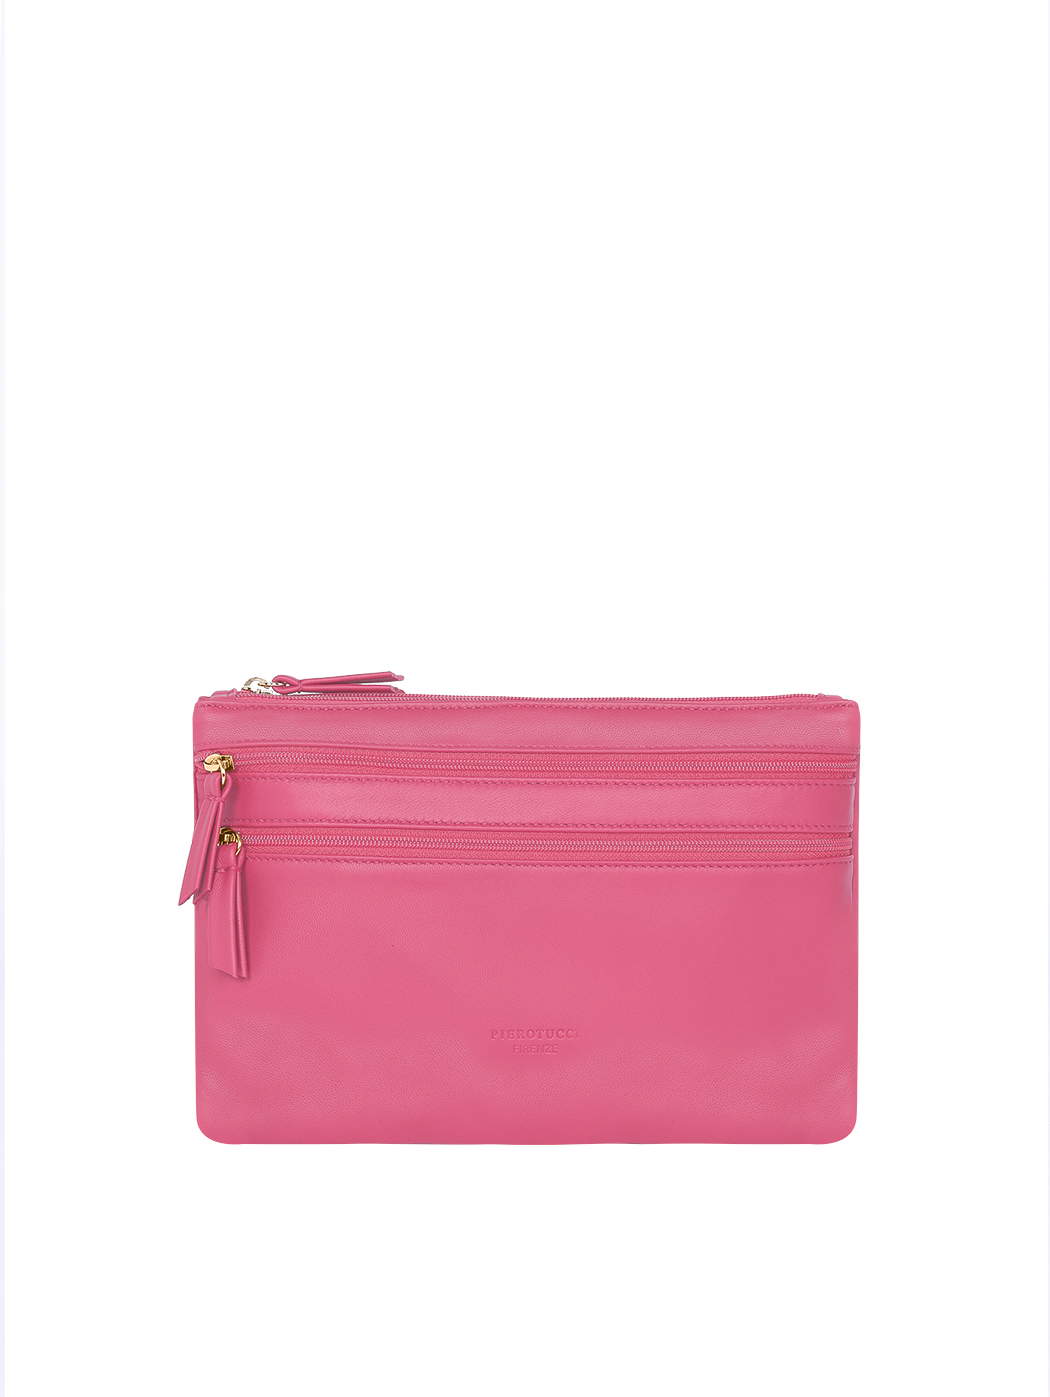 Pink Convertible Crossbody Clutch Bag